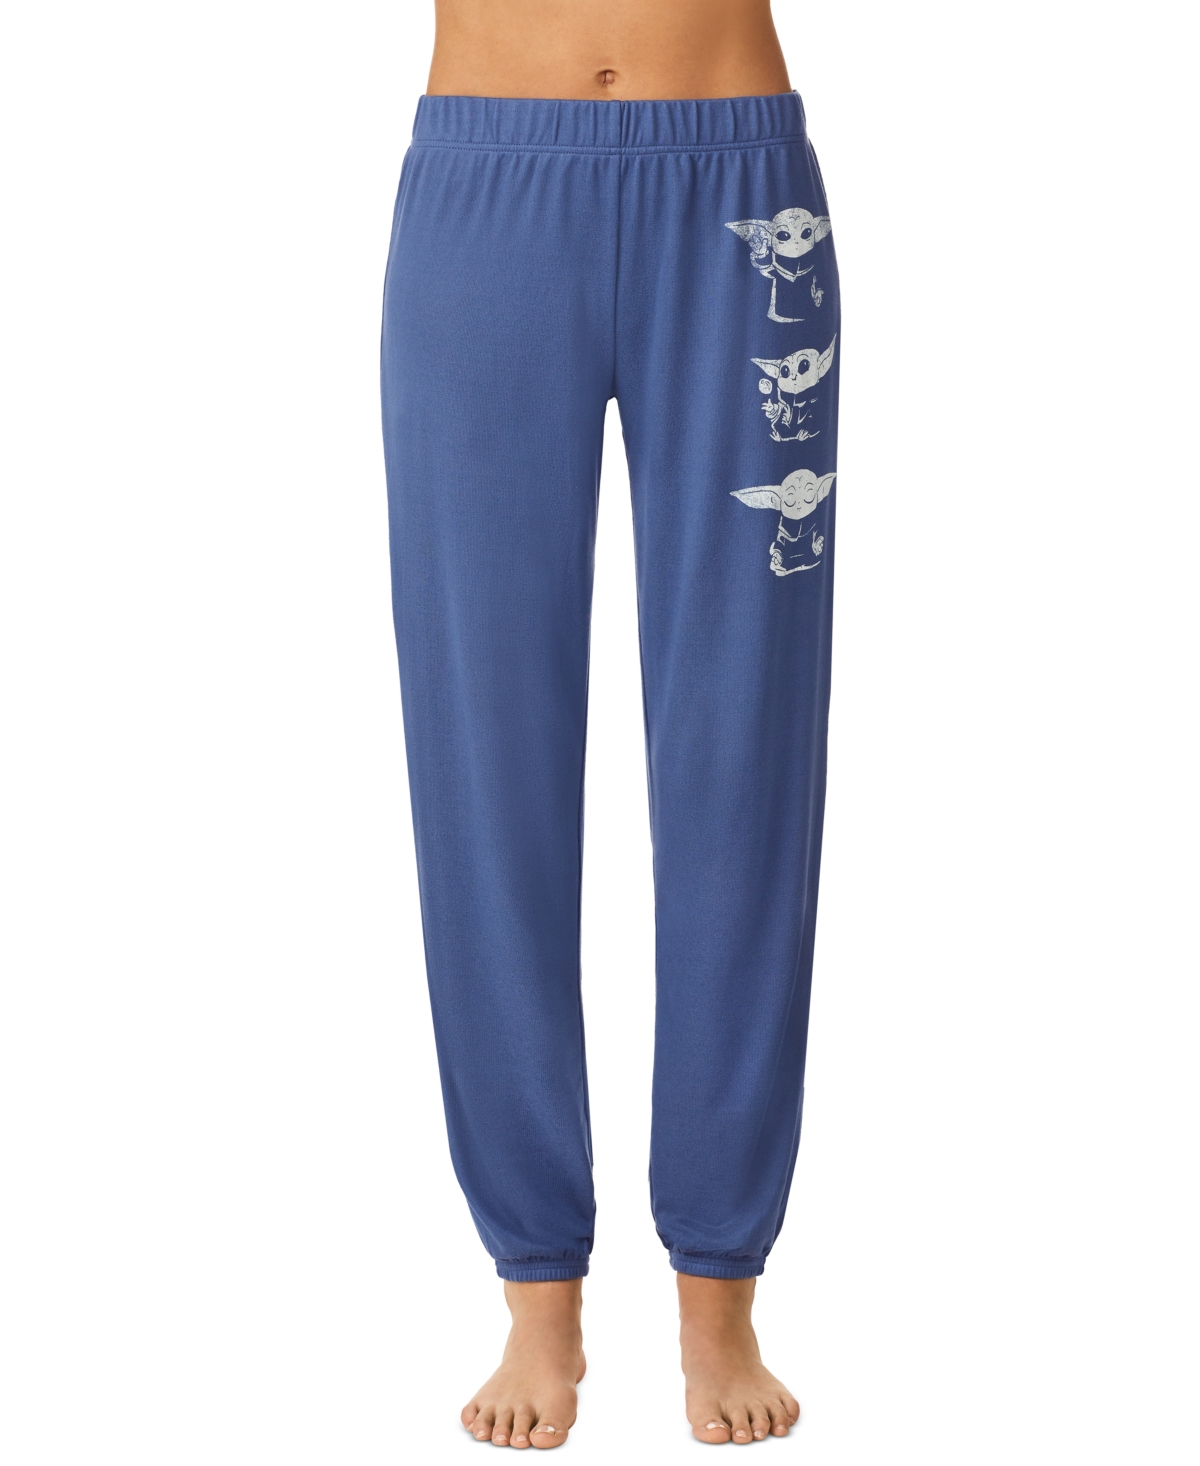 Women's Star Wars Printed Pajama Pants - Blue